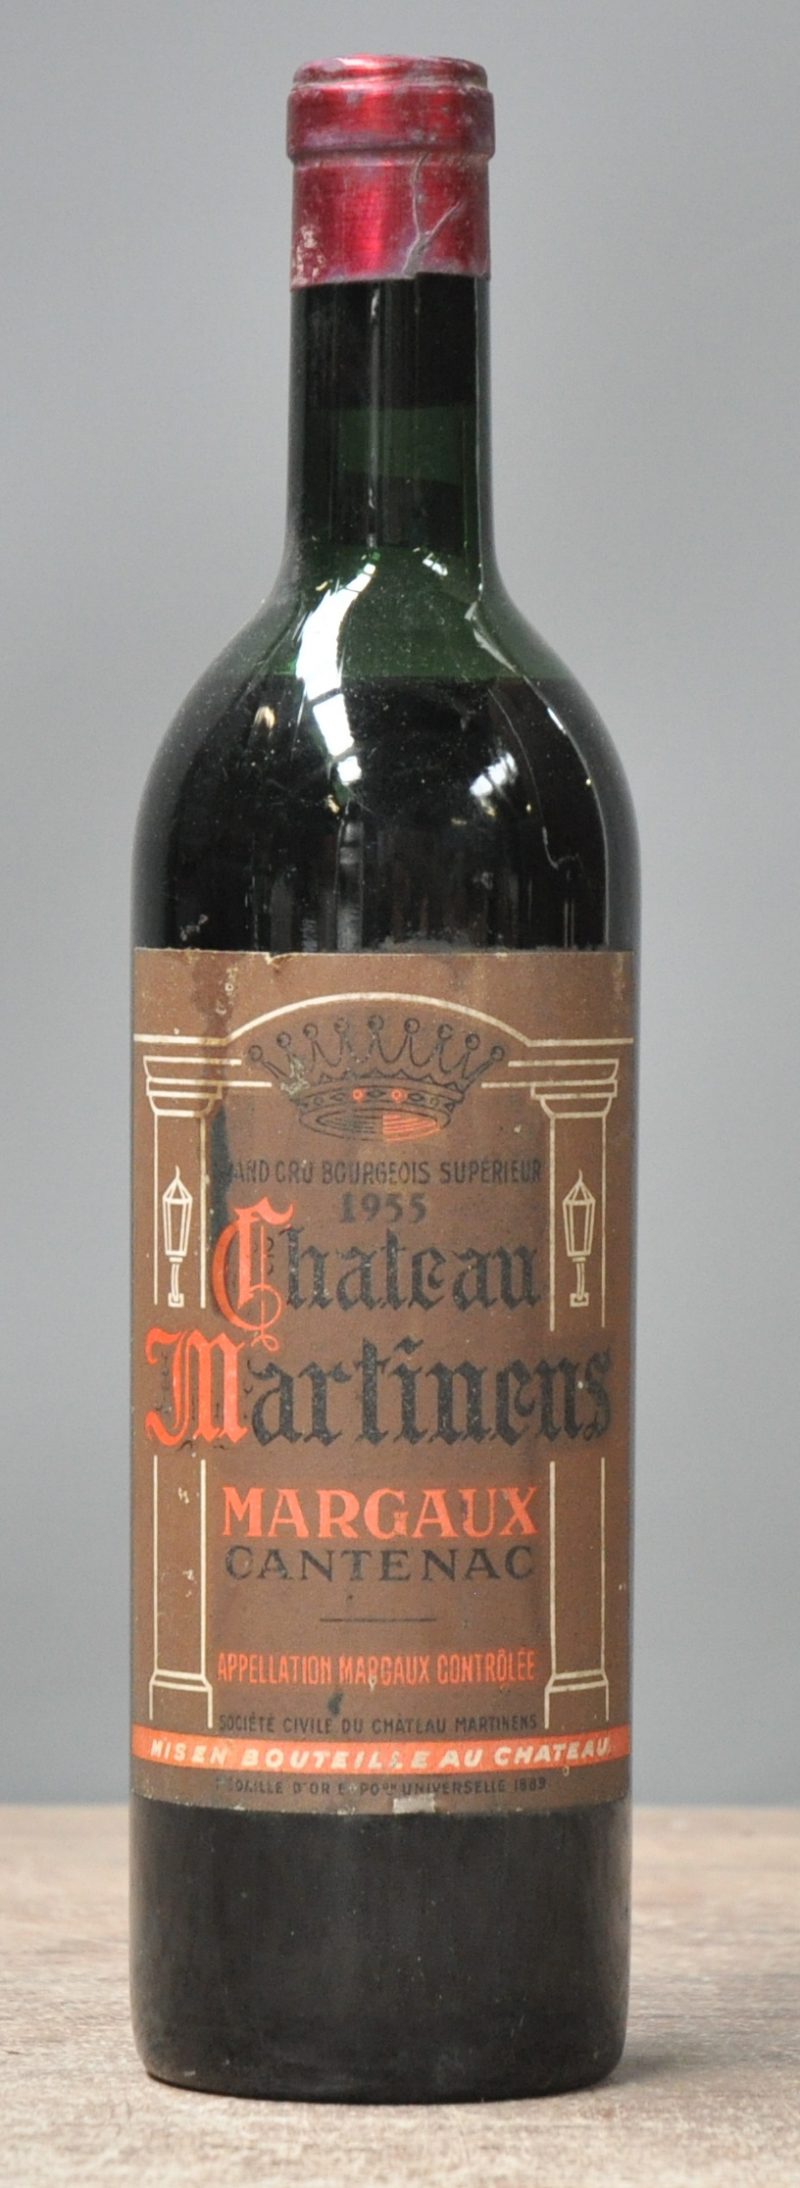 Ch. Martinens A.C. Margaux Cru grand bourgeois  M.C.  1955  aantal: 1 Bt. ts - ms